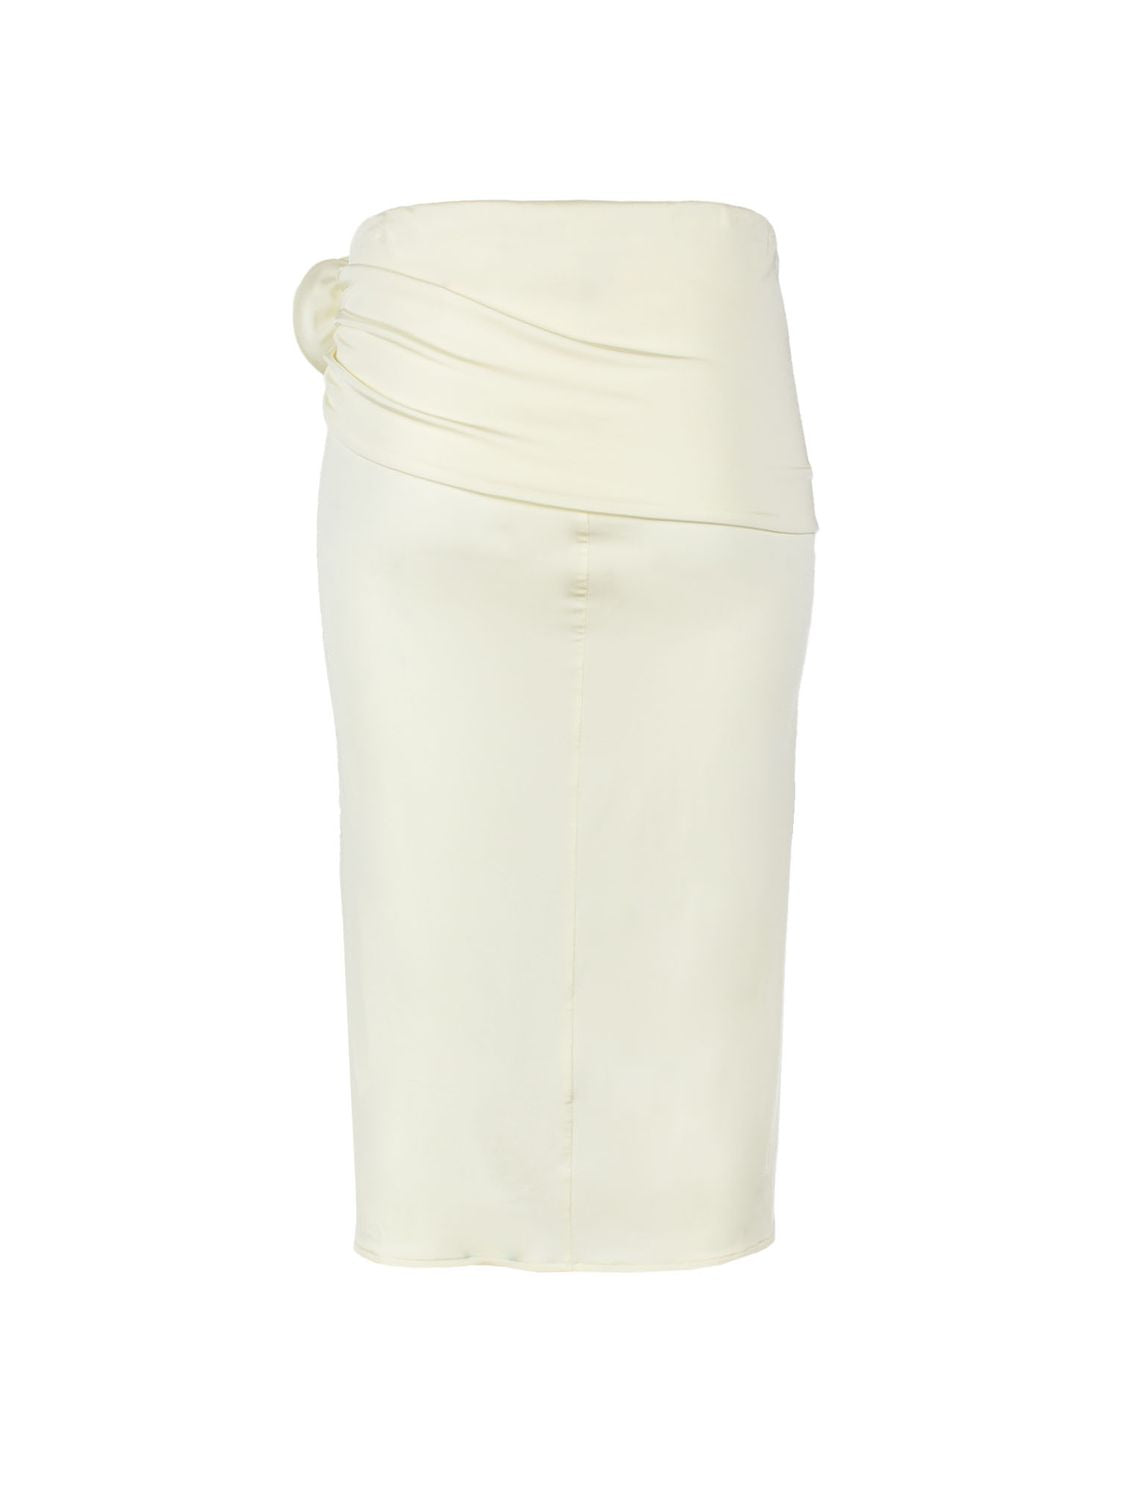 MAGDA BUTRYM Floral-Appliqué Pencil Skirt - Cream White, Pencil Silhouette, Straight Hem, Knee-Length